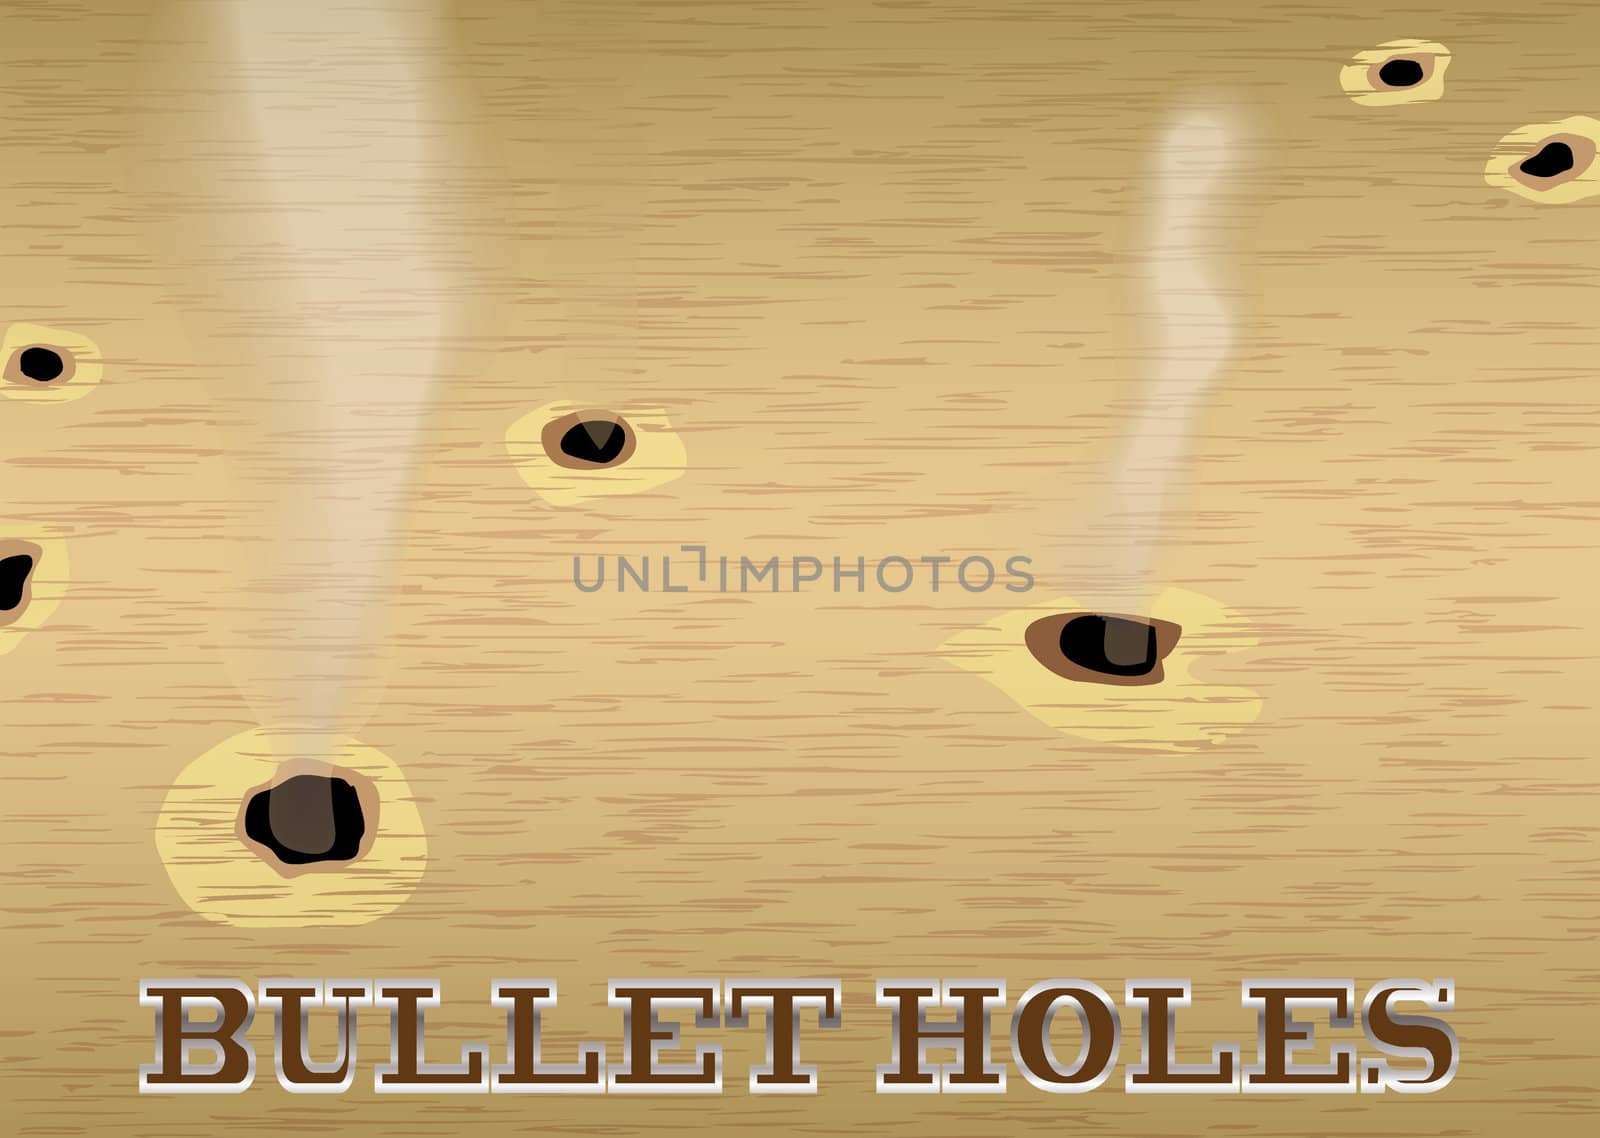 Bullet hole wood by nicemonkey